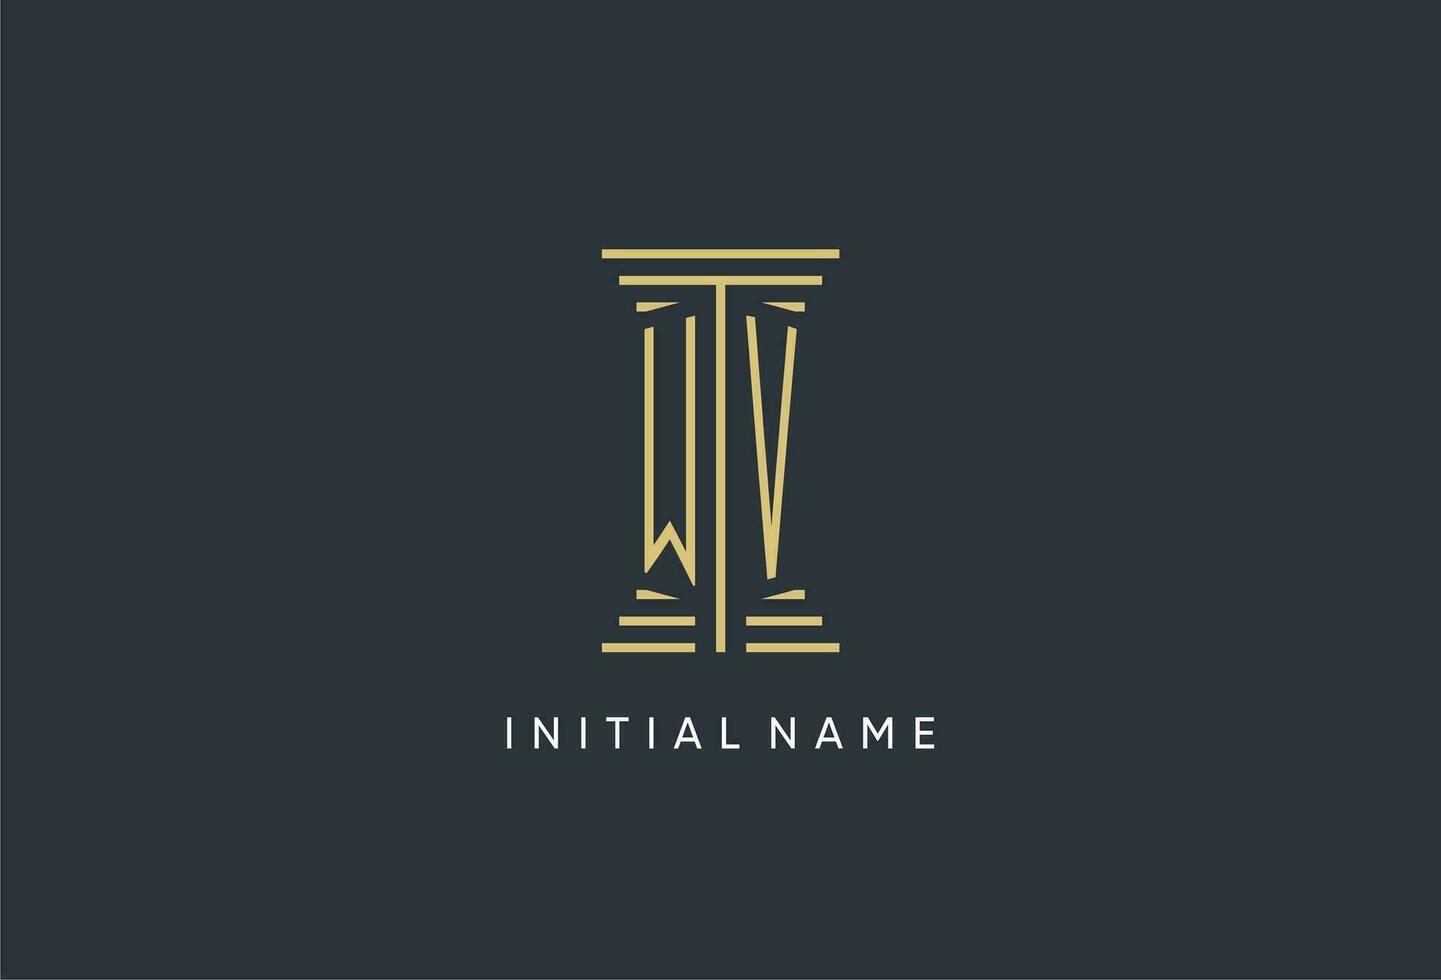 WV initial monogram with pillar shape logo design vector